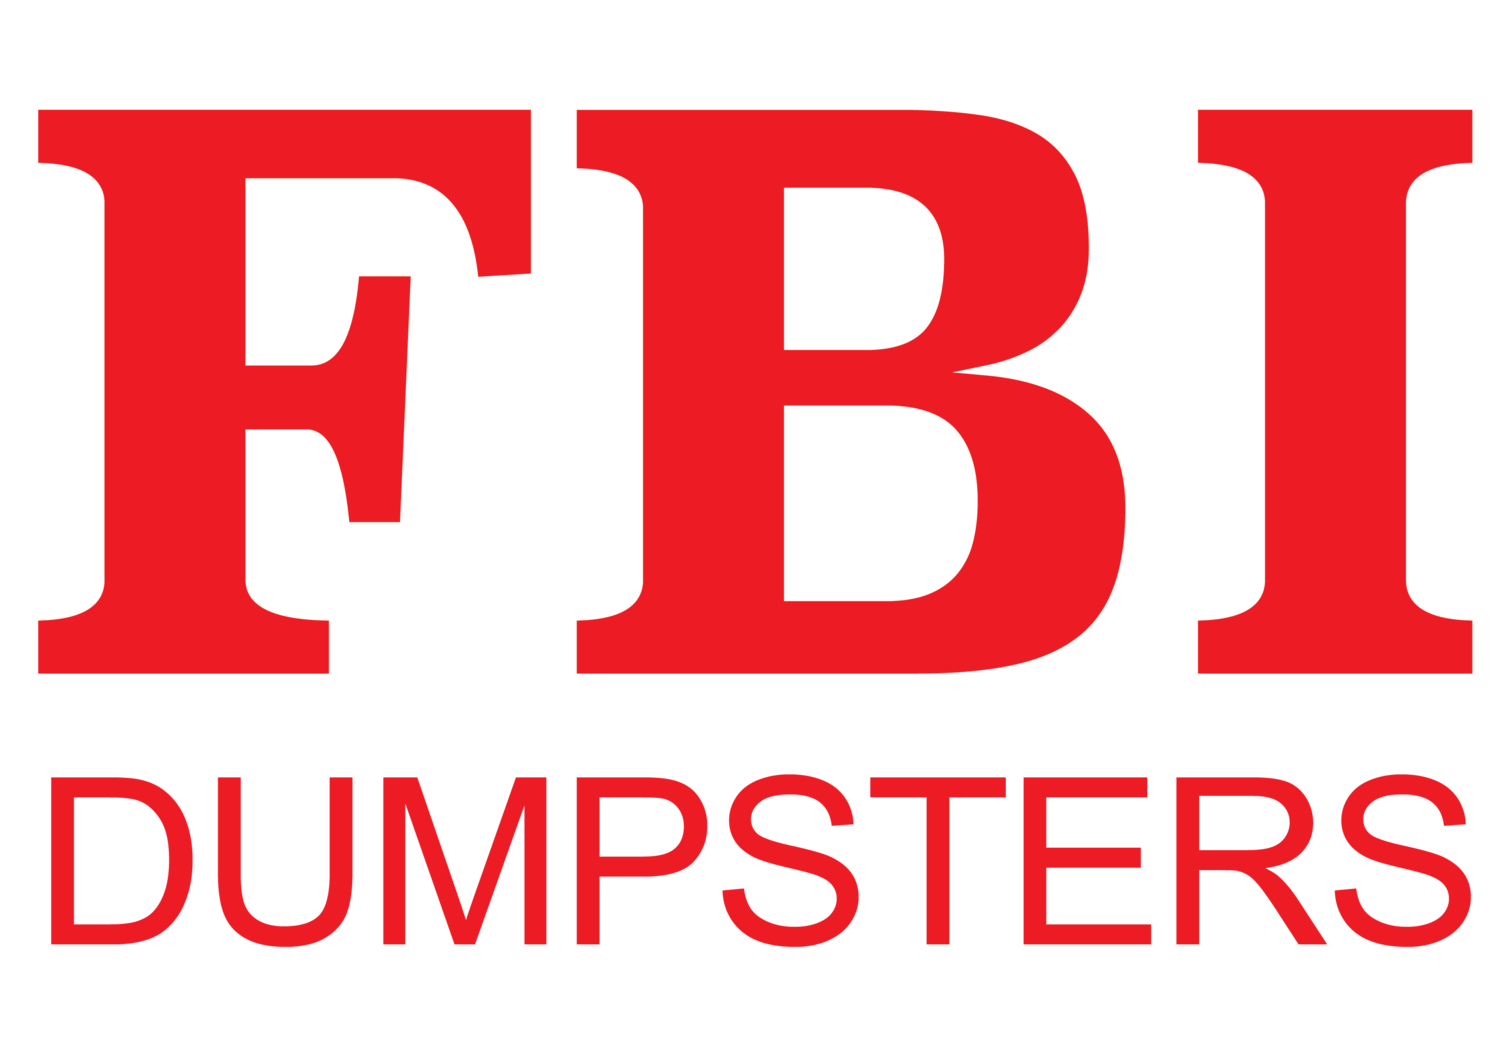 FBI Dumpsters